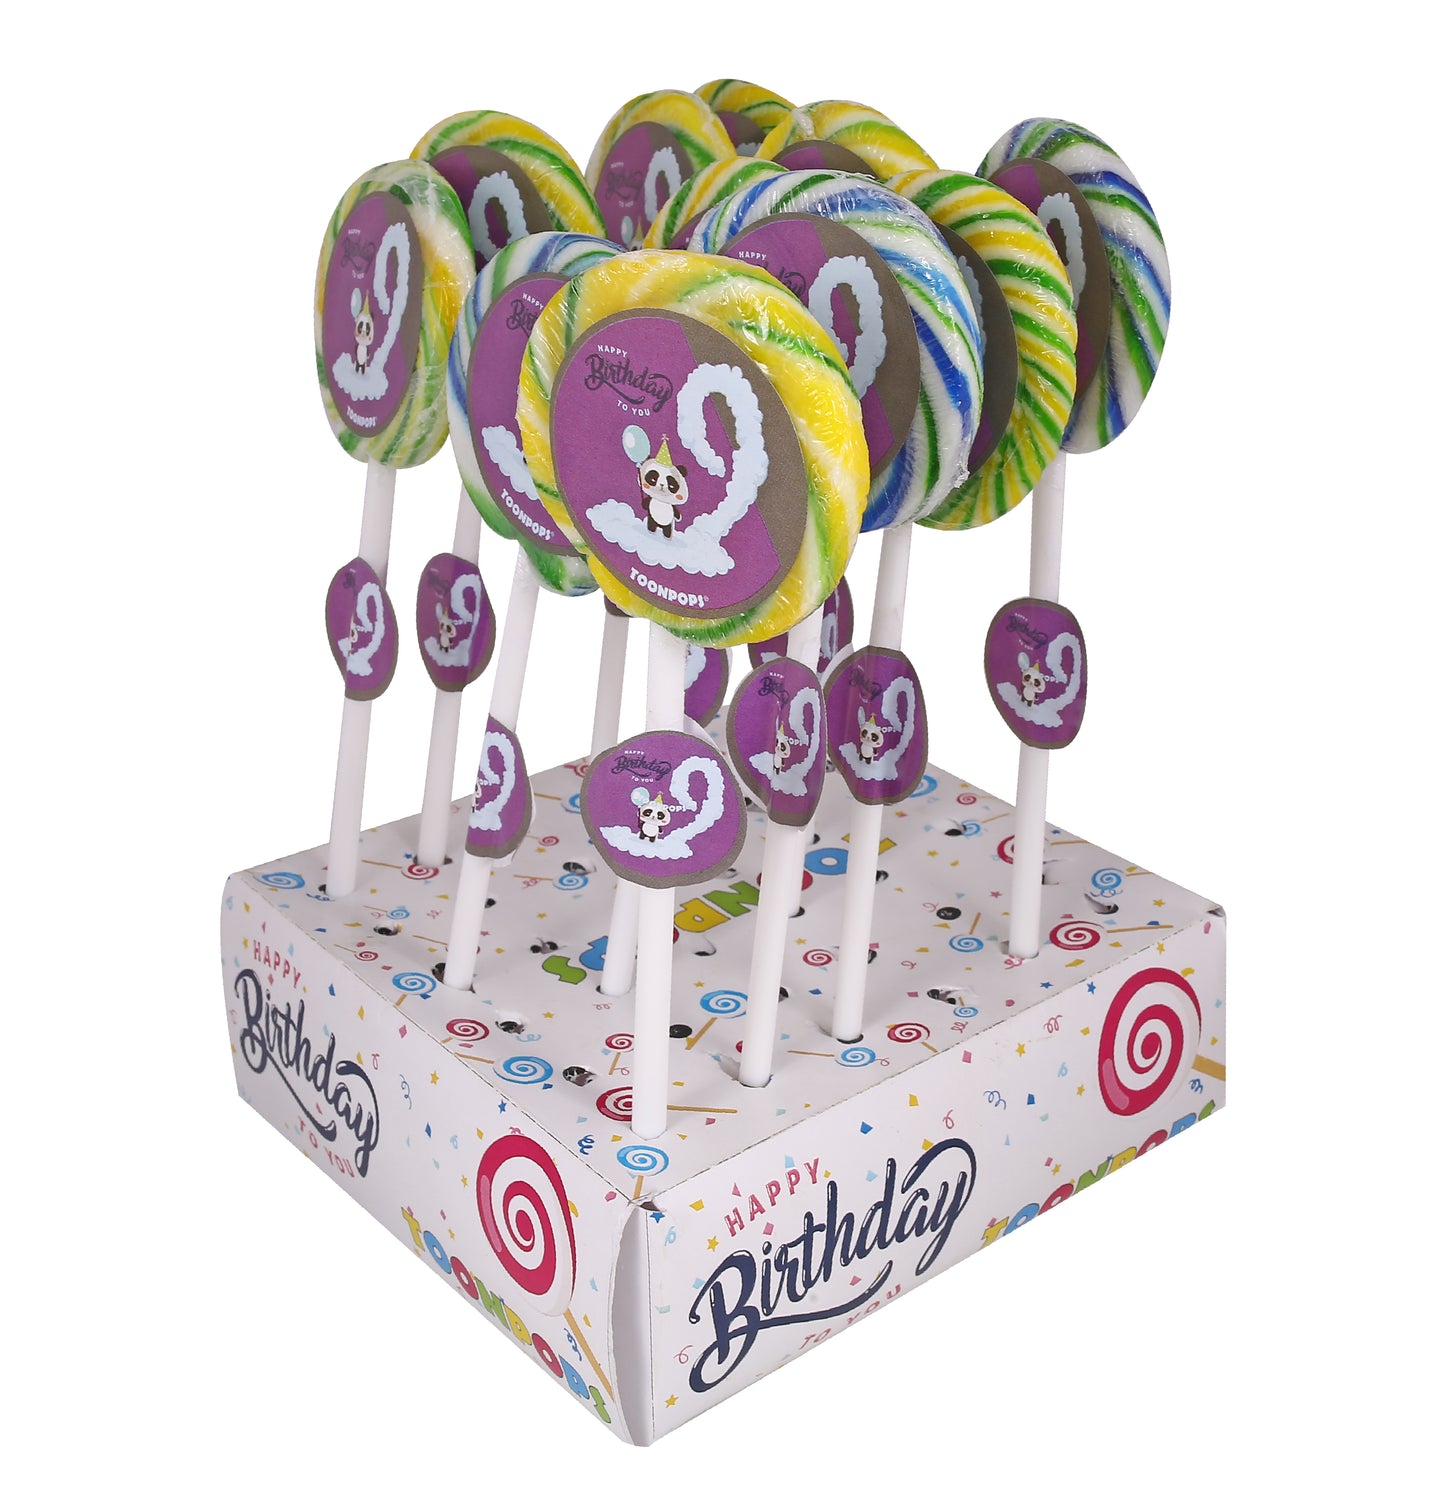 9th Birthday Pack | Cartoon Lollipops | Pack  of 60 | Toonpops